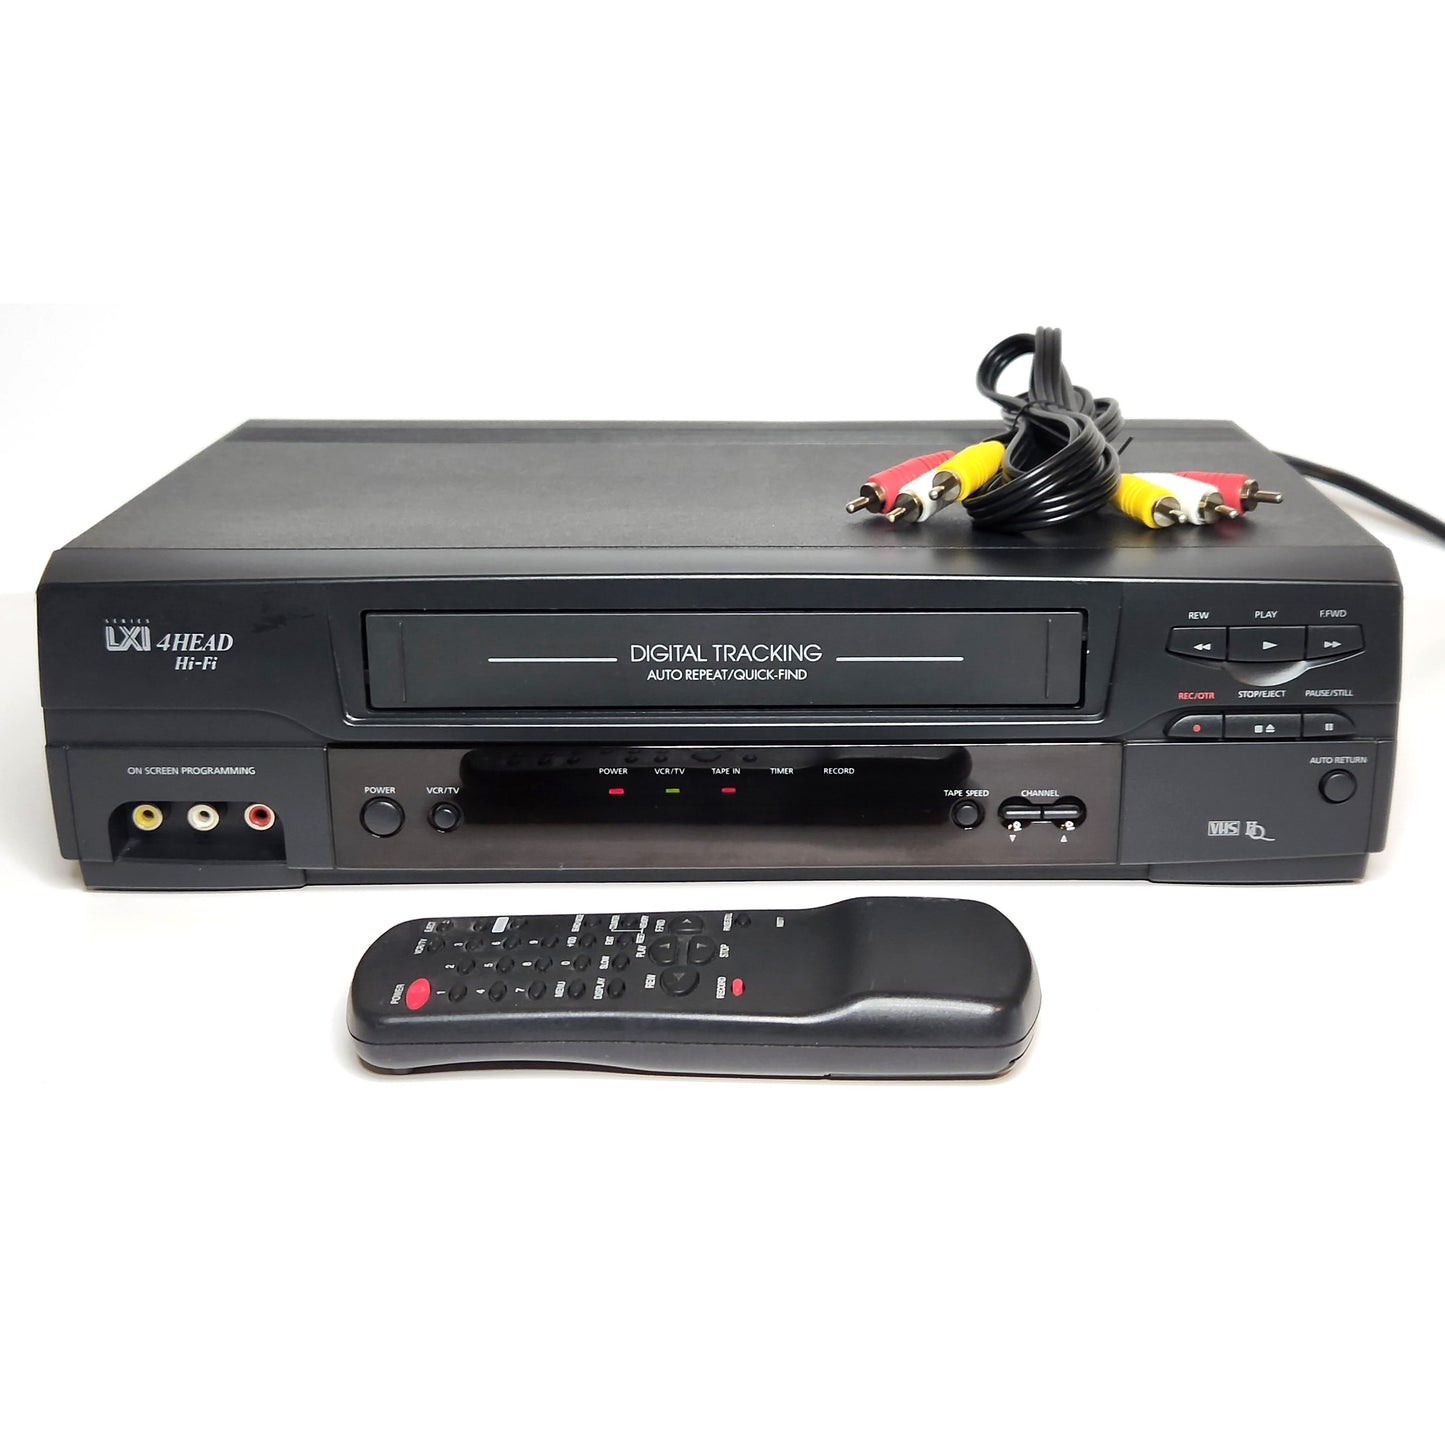 Series LXI 934.551158890 VCR, 4-Head Hi-Fi Stereo